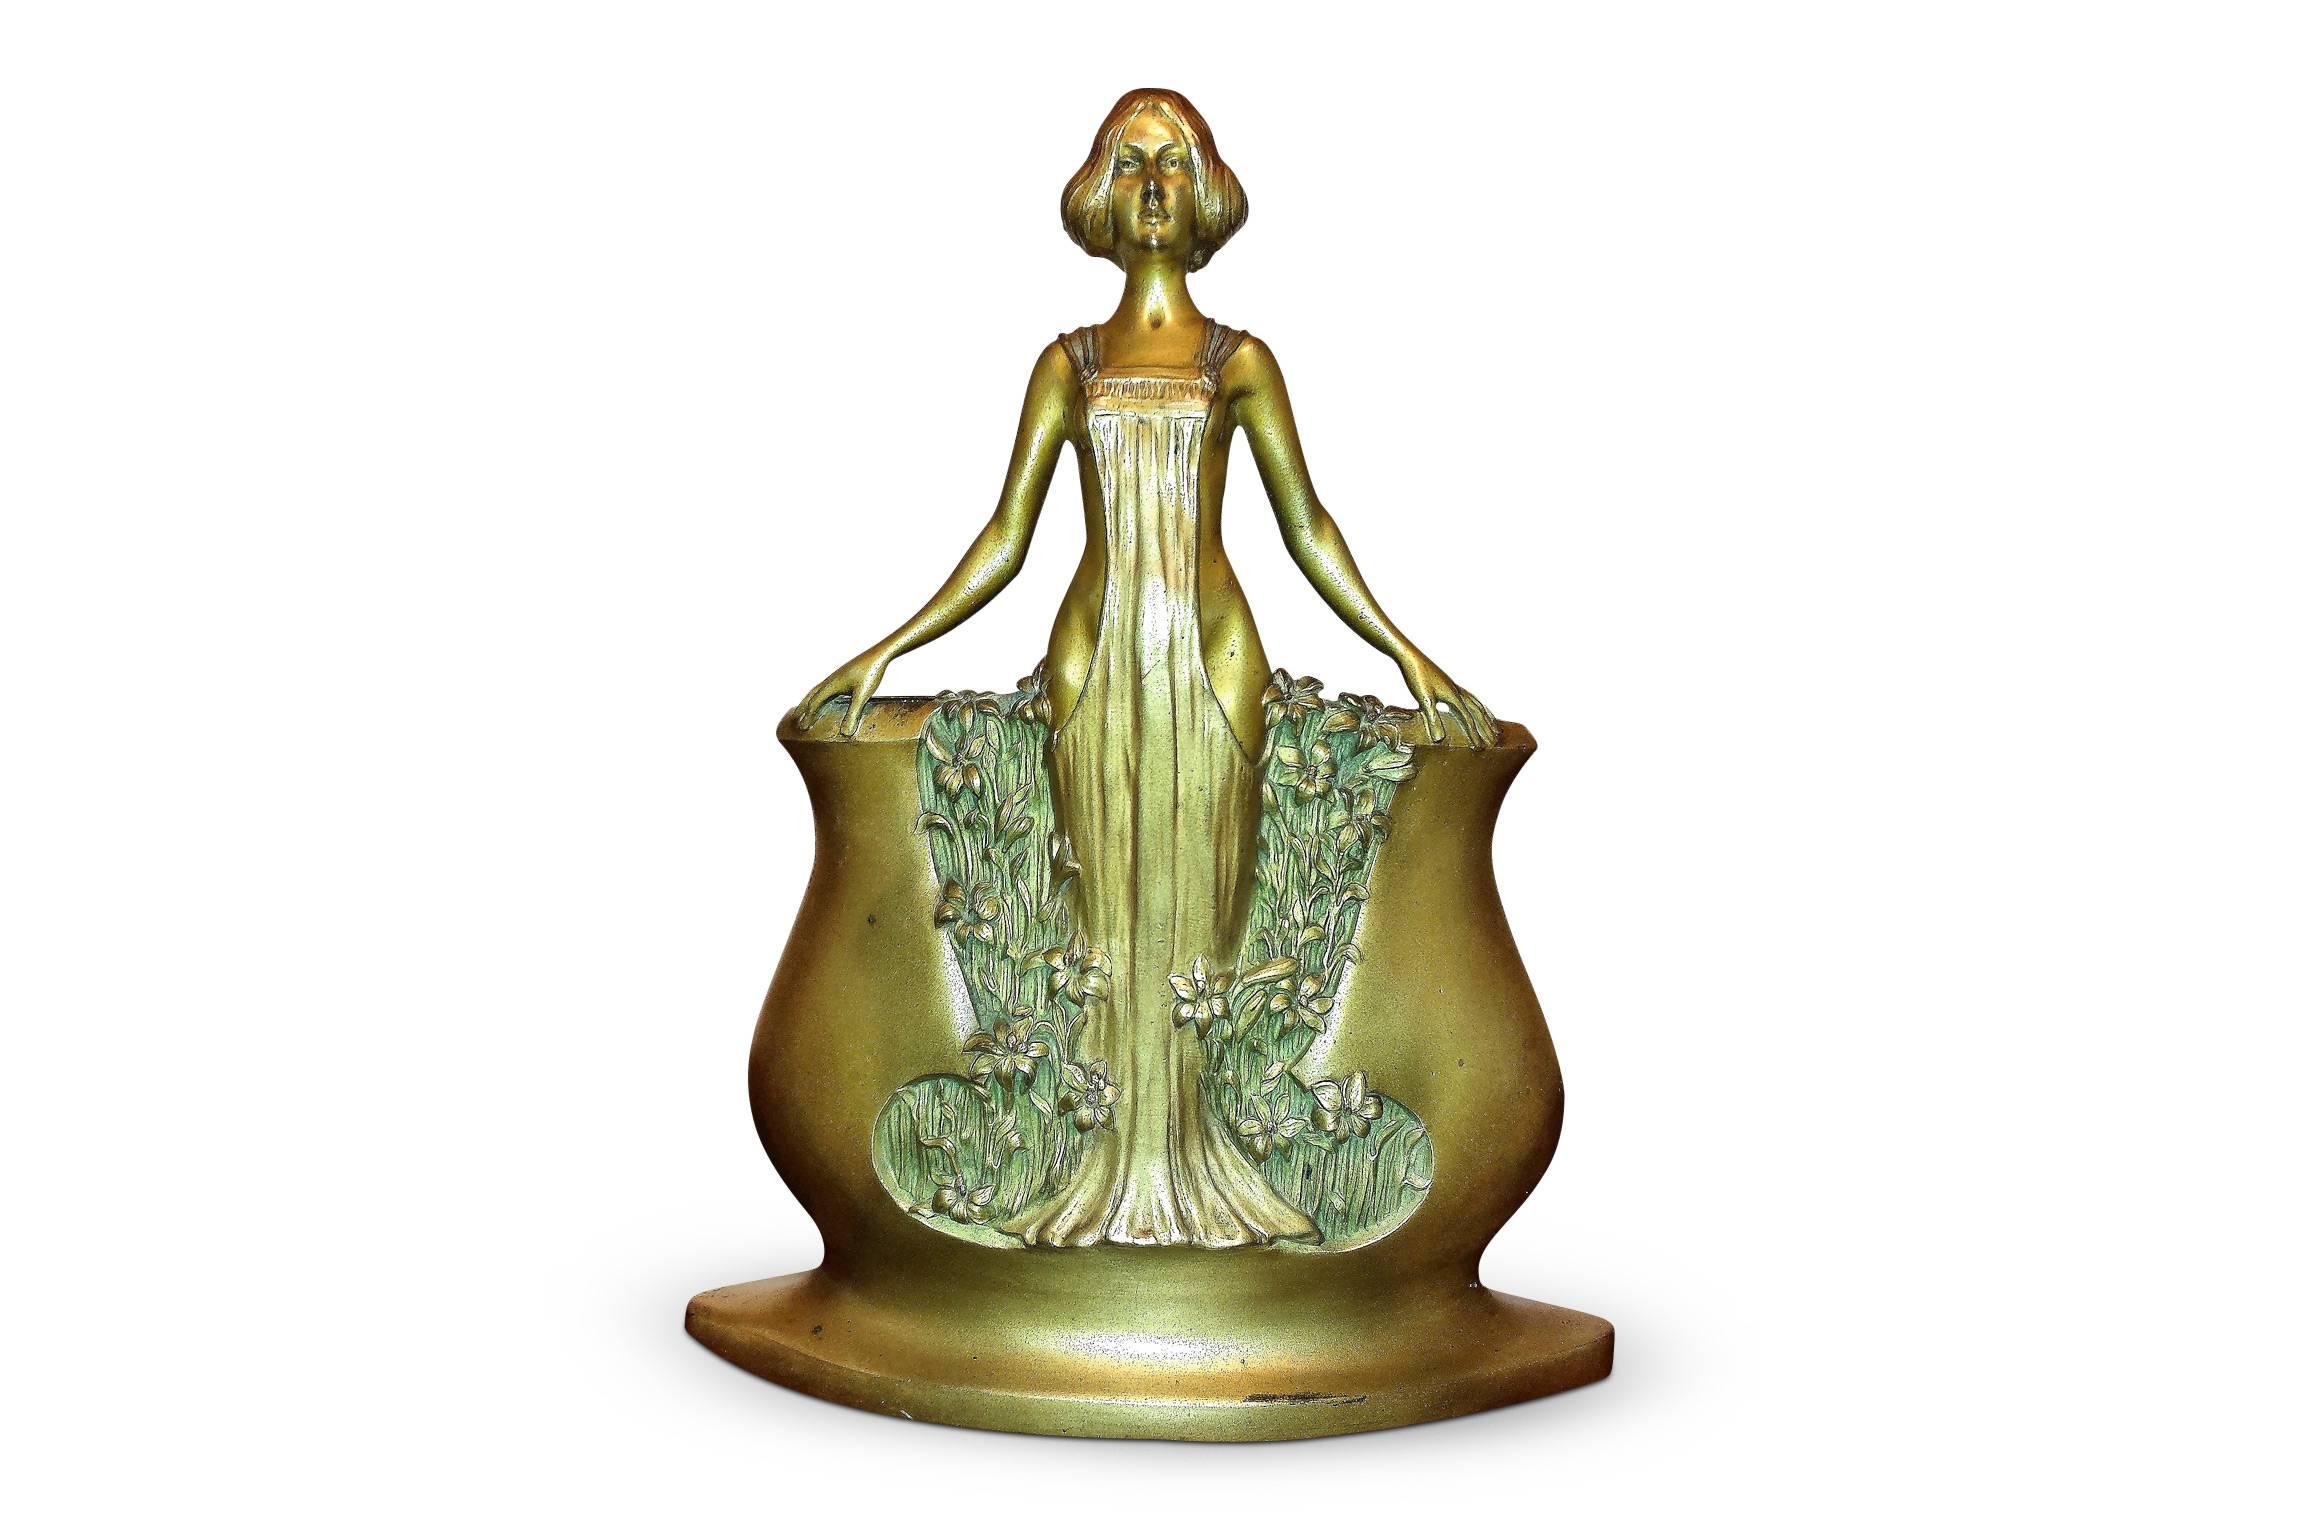 A bronze vase featuring an Art Nouveau maiden in gold and green patinations. Signed Ch.Korschann, Paris, circa 1900. Excellent condition.